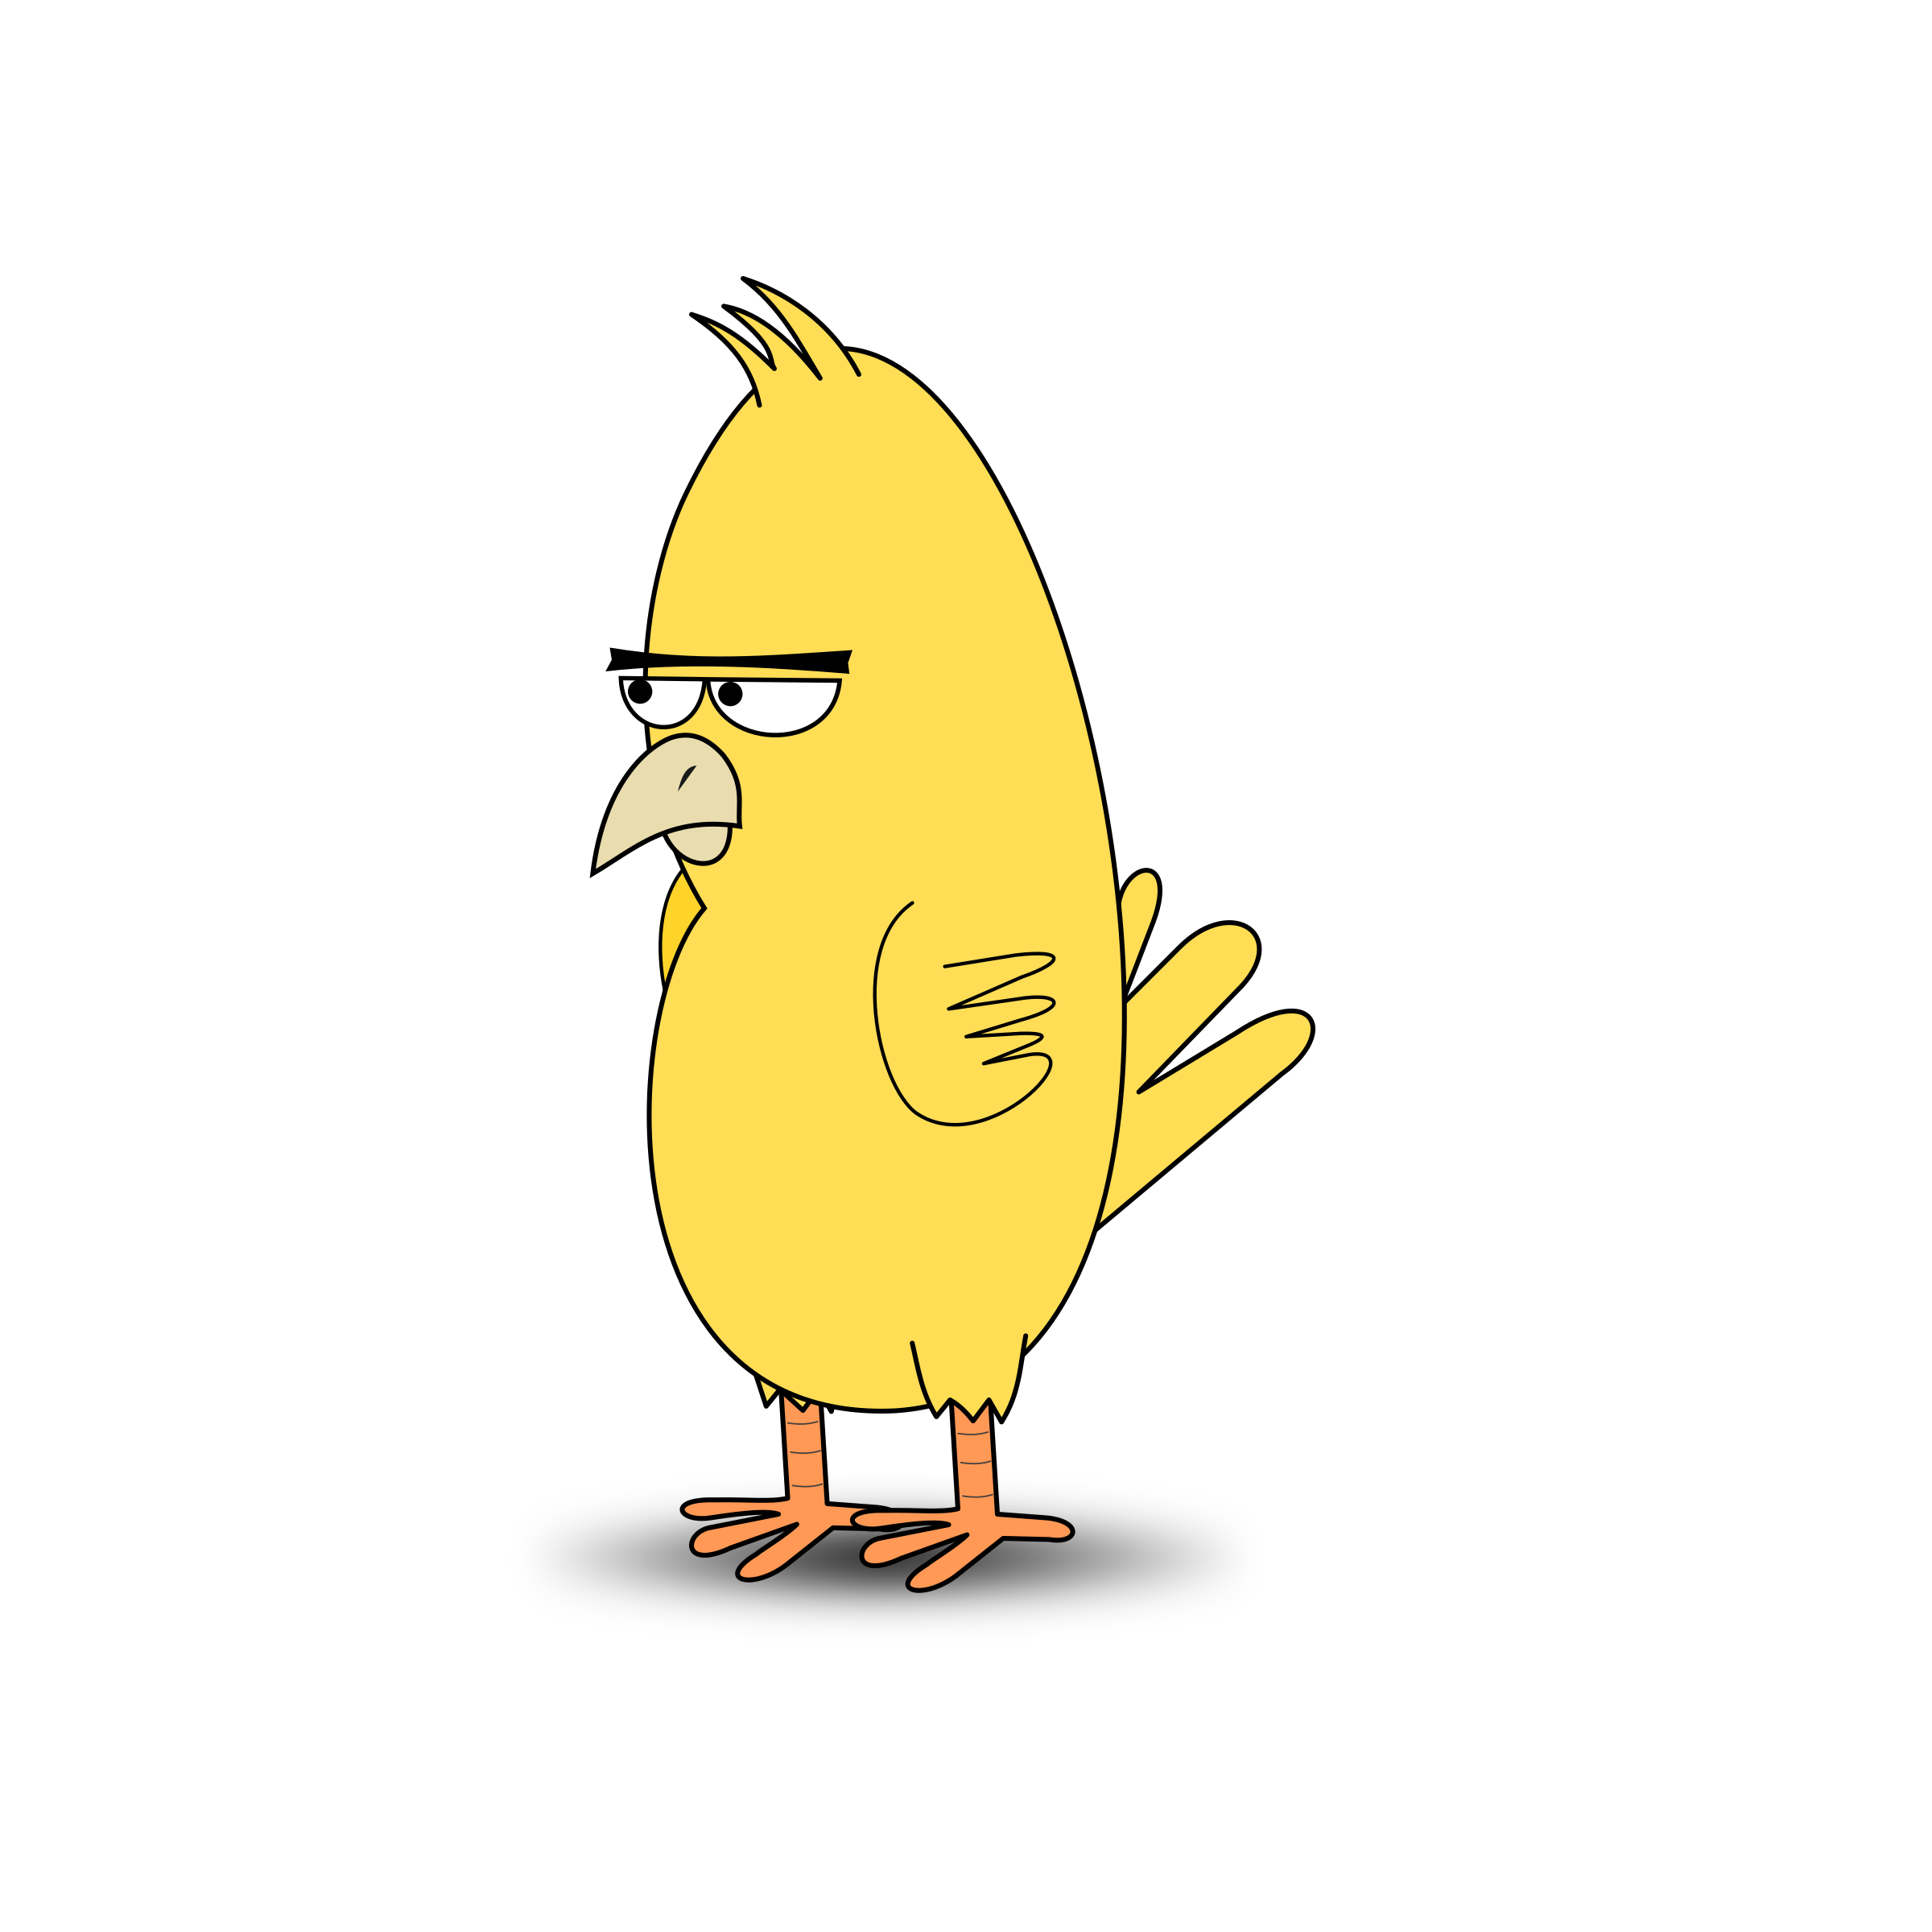 Clipart chicken mad. Bird pajaro big image